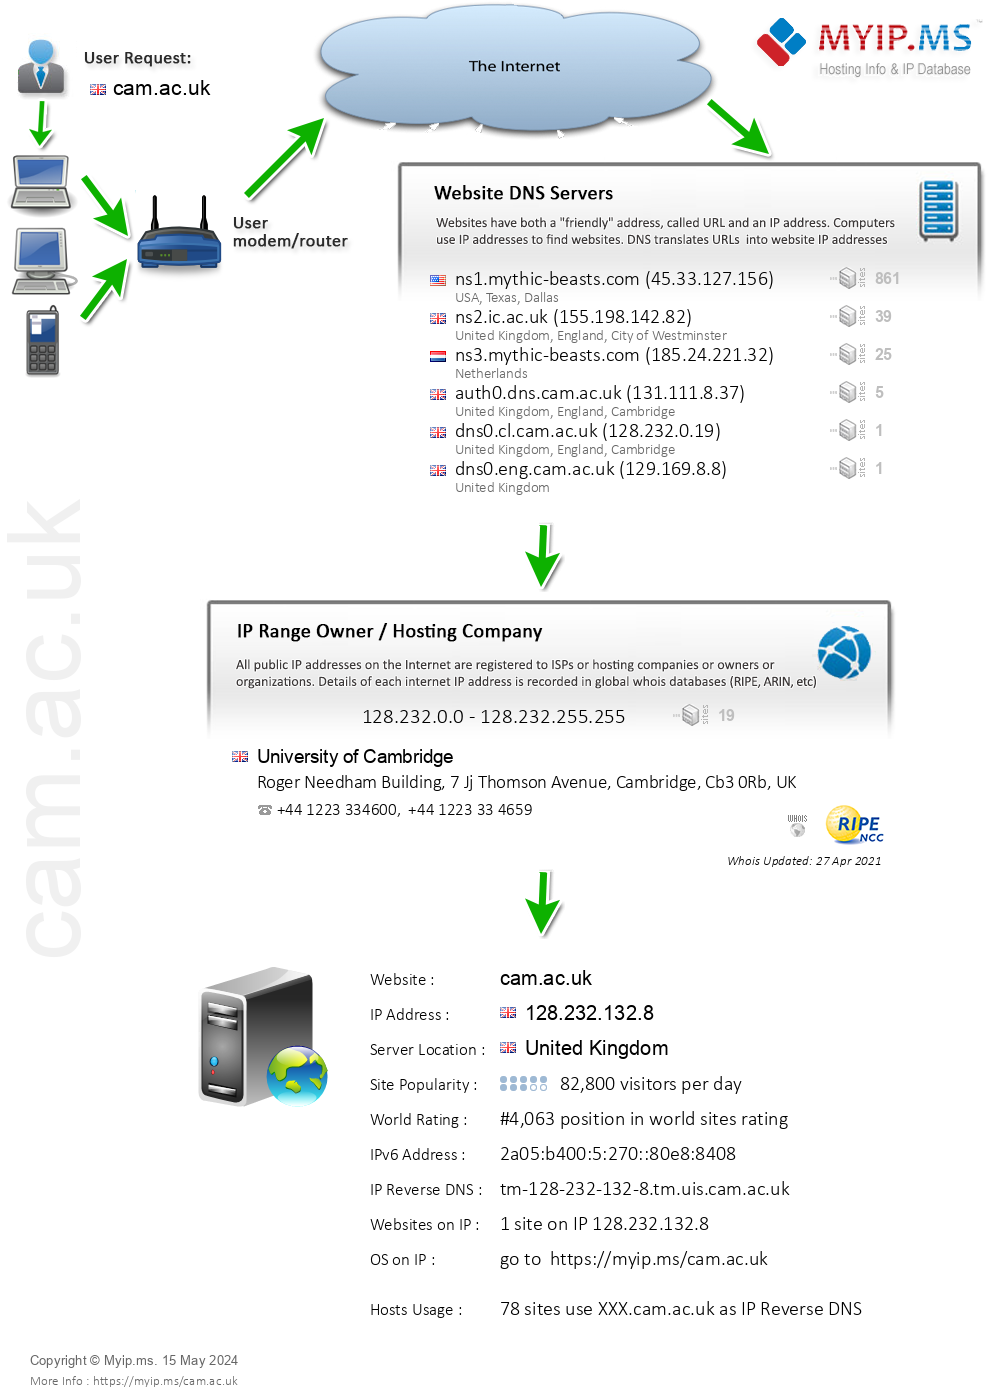 Cam.ac.uk - Website Hosting Visual IP Diagram